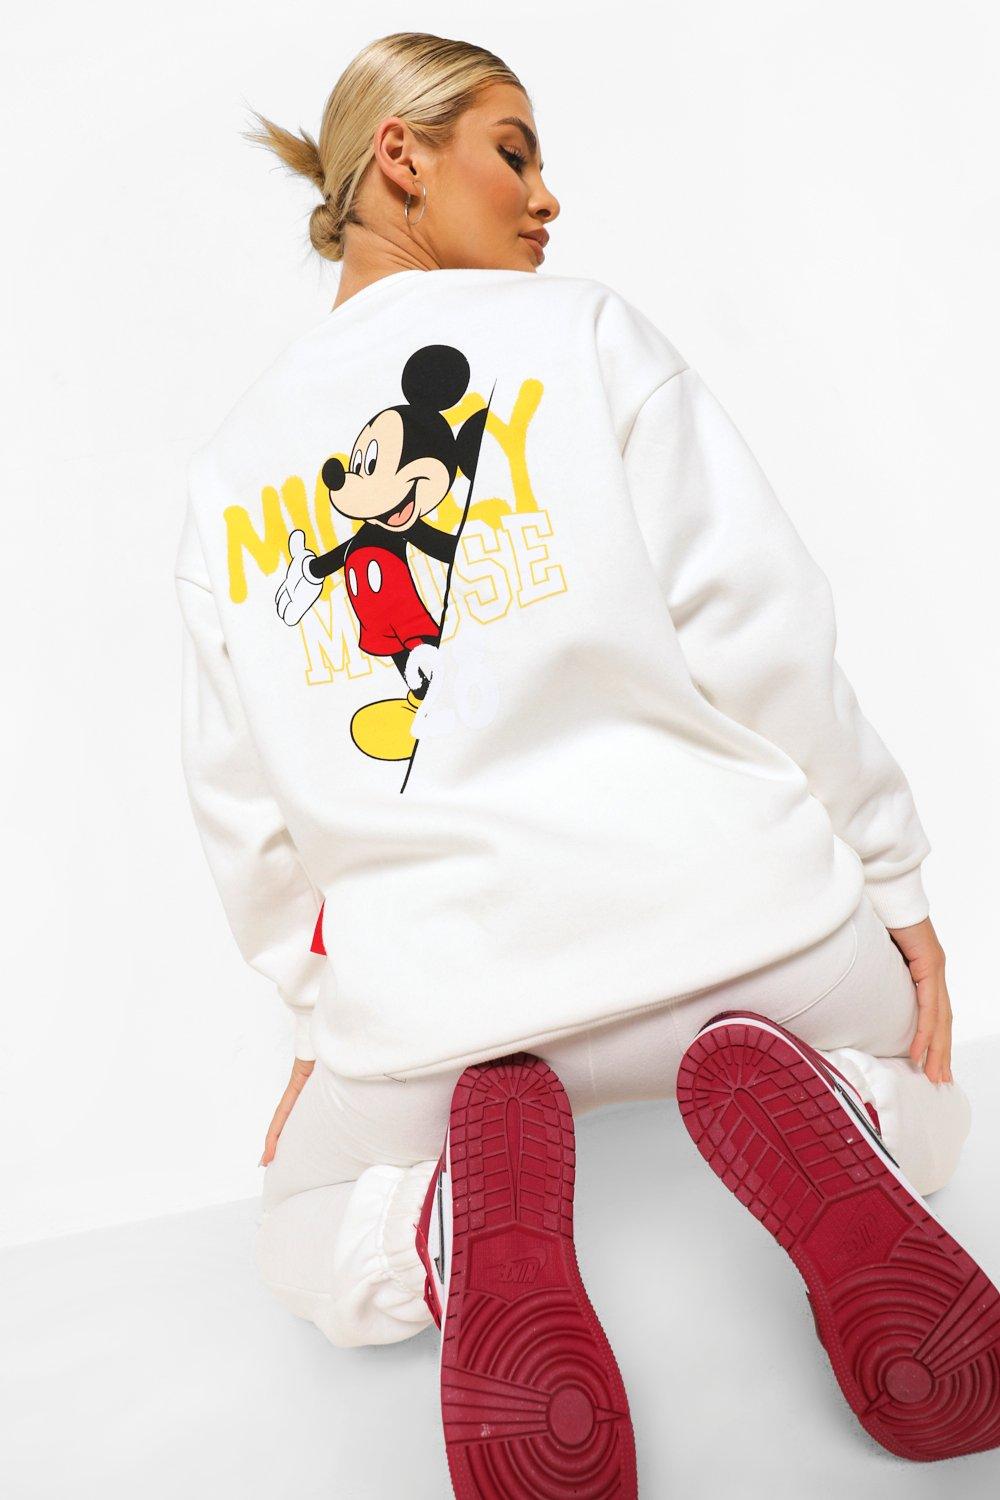 Productie Stationair Zelfrespect Disney Mickey Mouse Trui | boohoo